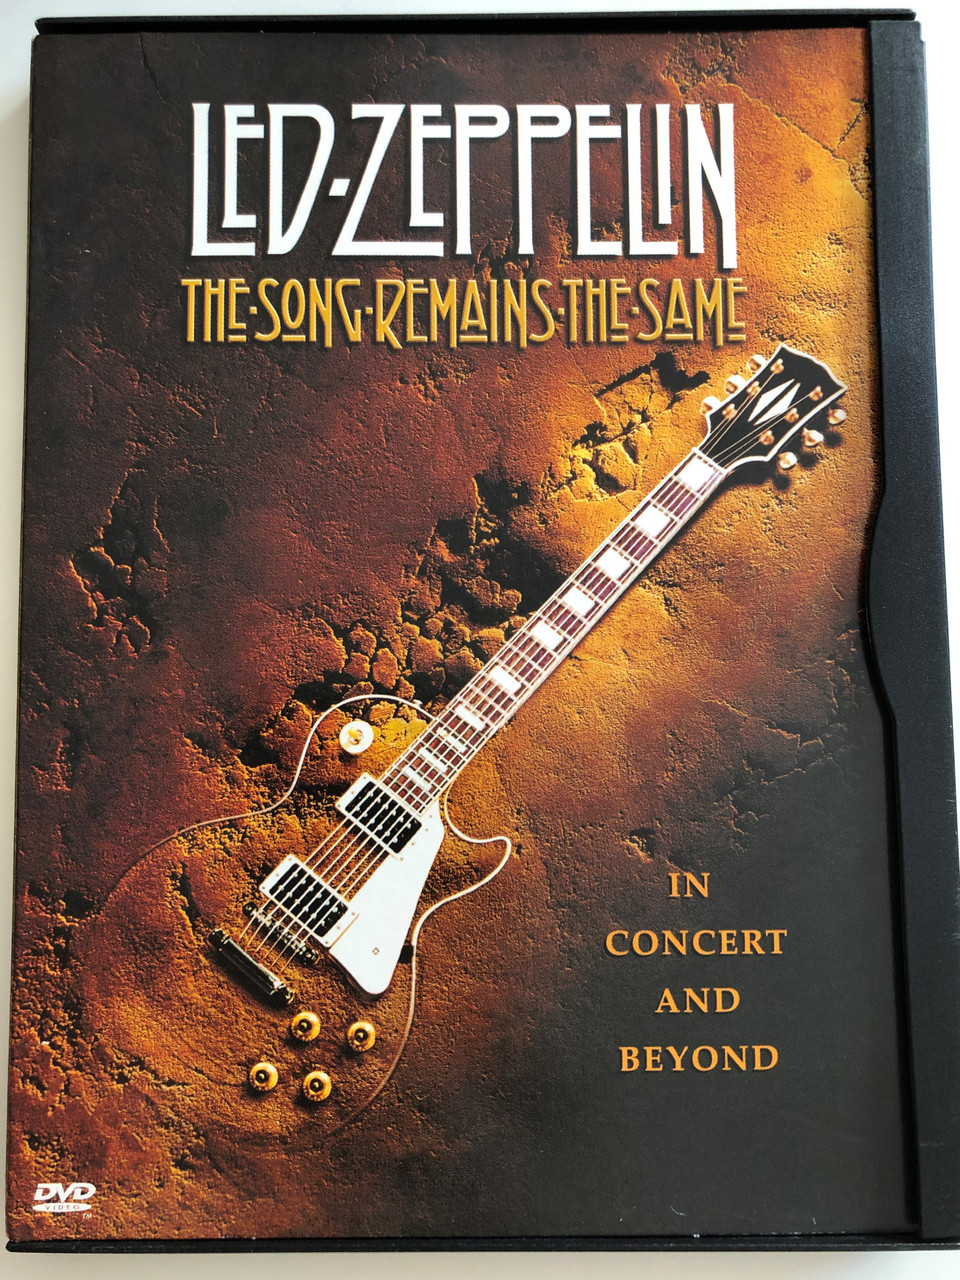 kopiëren Korea Donau Led Zeppelin - The Song Remains The Same DVD 1976 In Concert and Beyond /  Filmed at Madison Square Garden / John Bonham, John Paul Jones, Jimmy Page,  Robert Plant - bibleinmylanguage